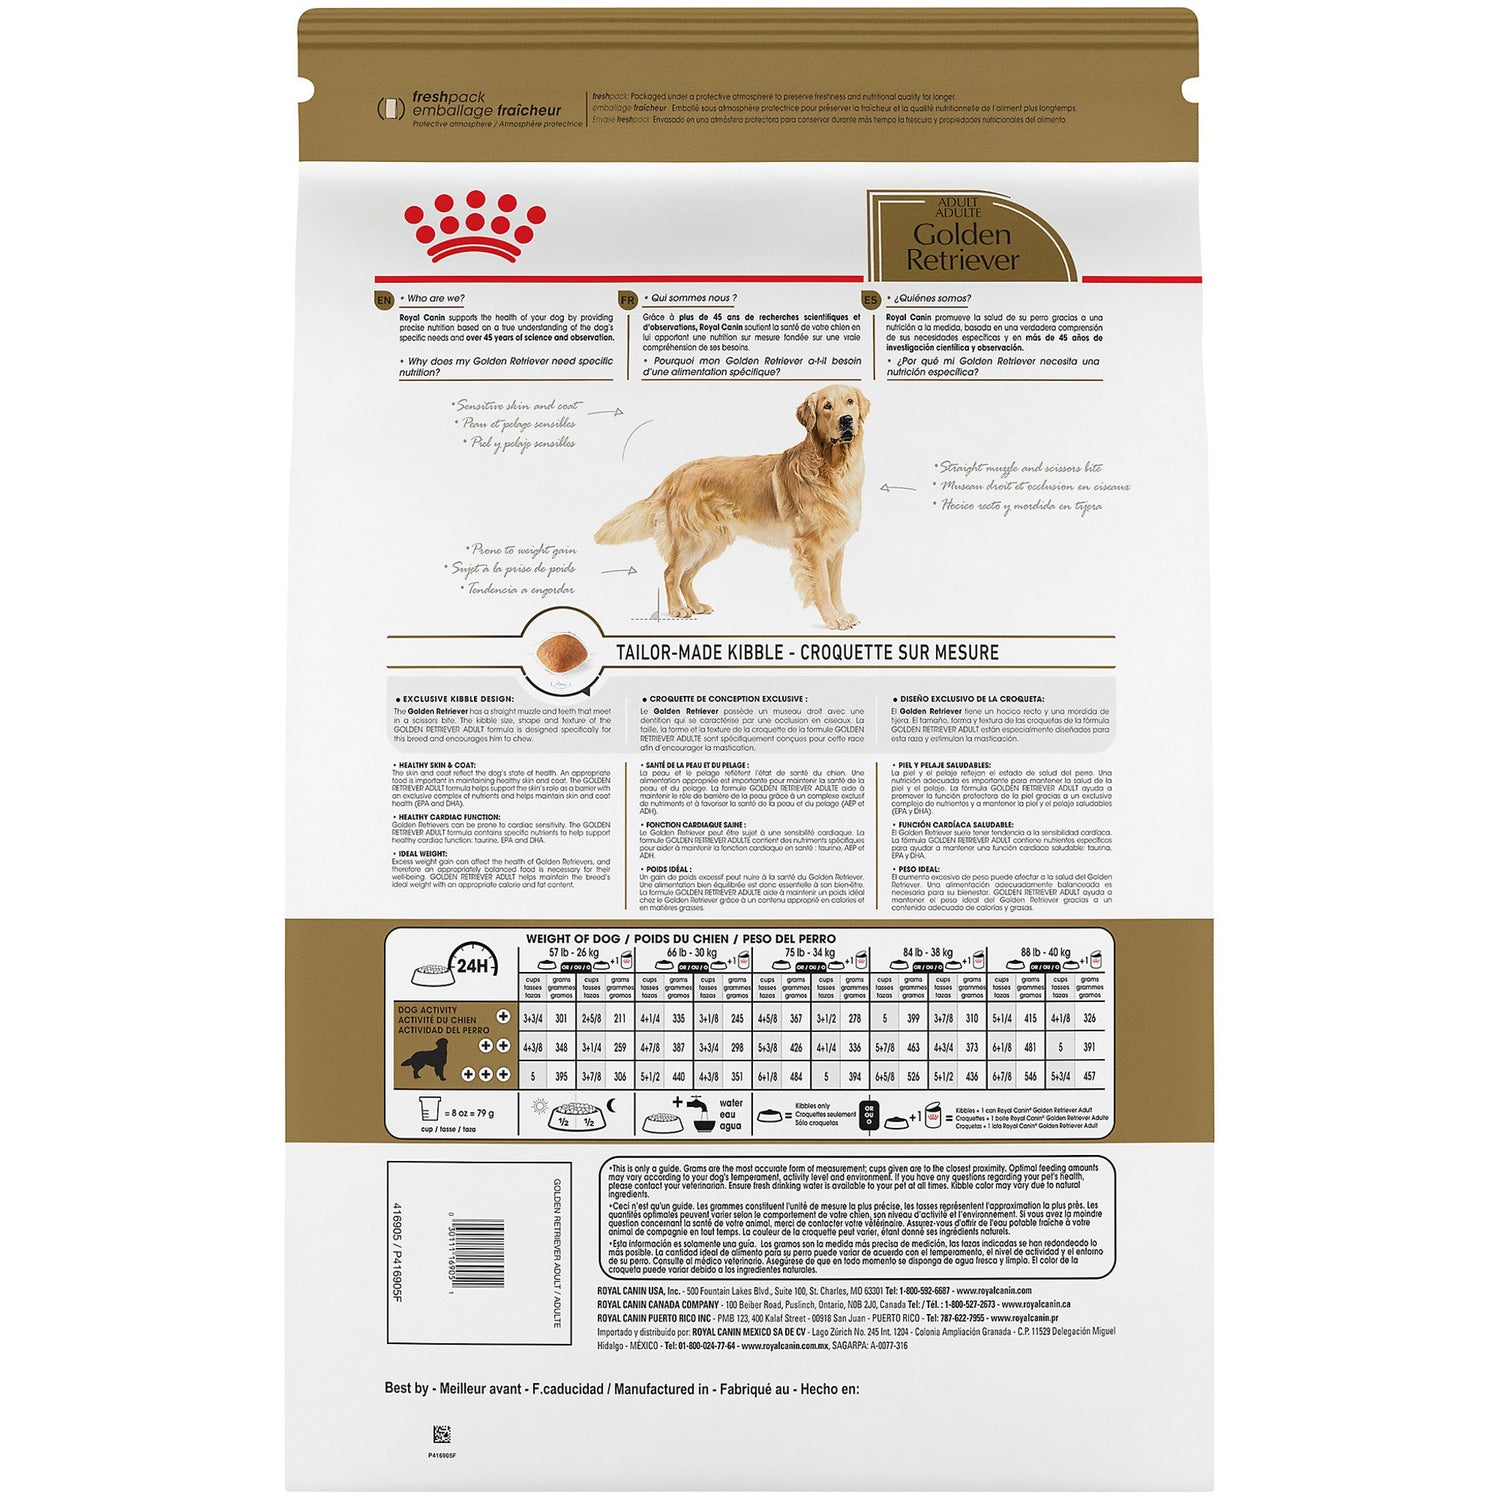 Royal Canin® Breed Health Nutrition® Golden Retriever Adult Dry Dog Food